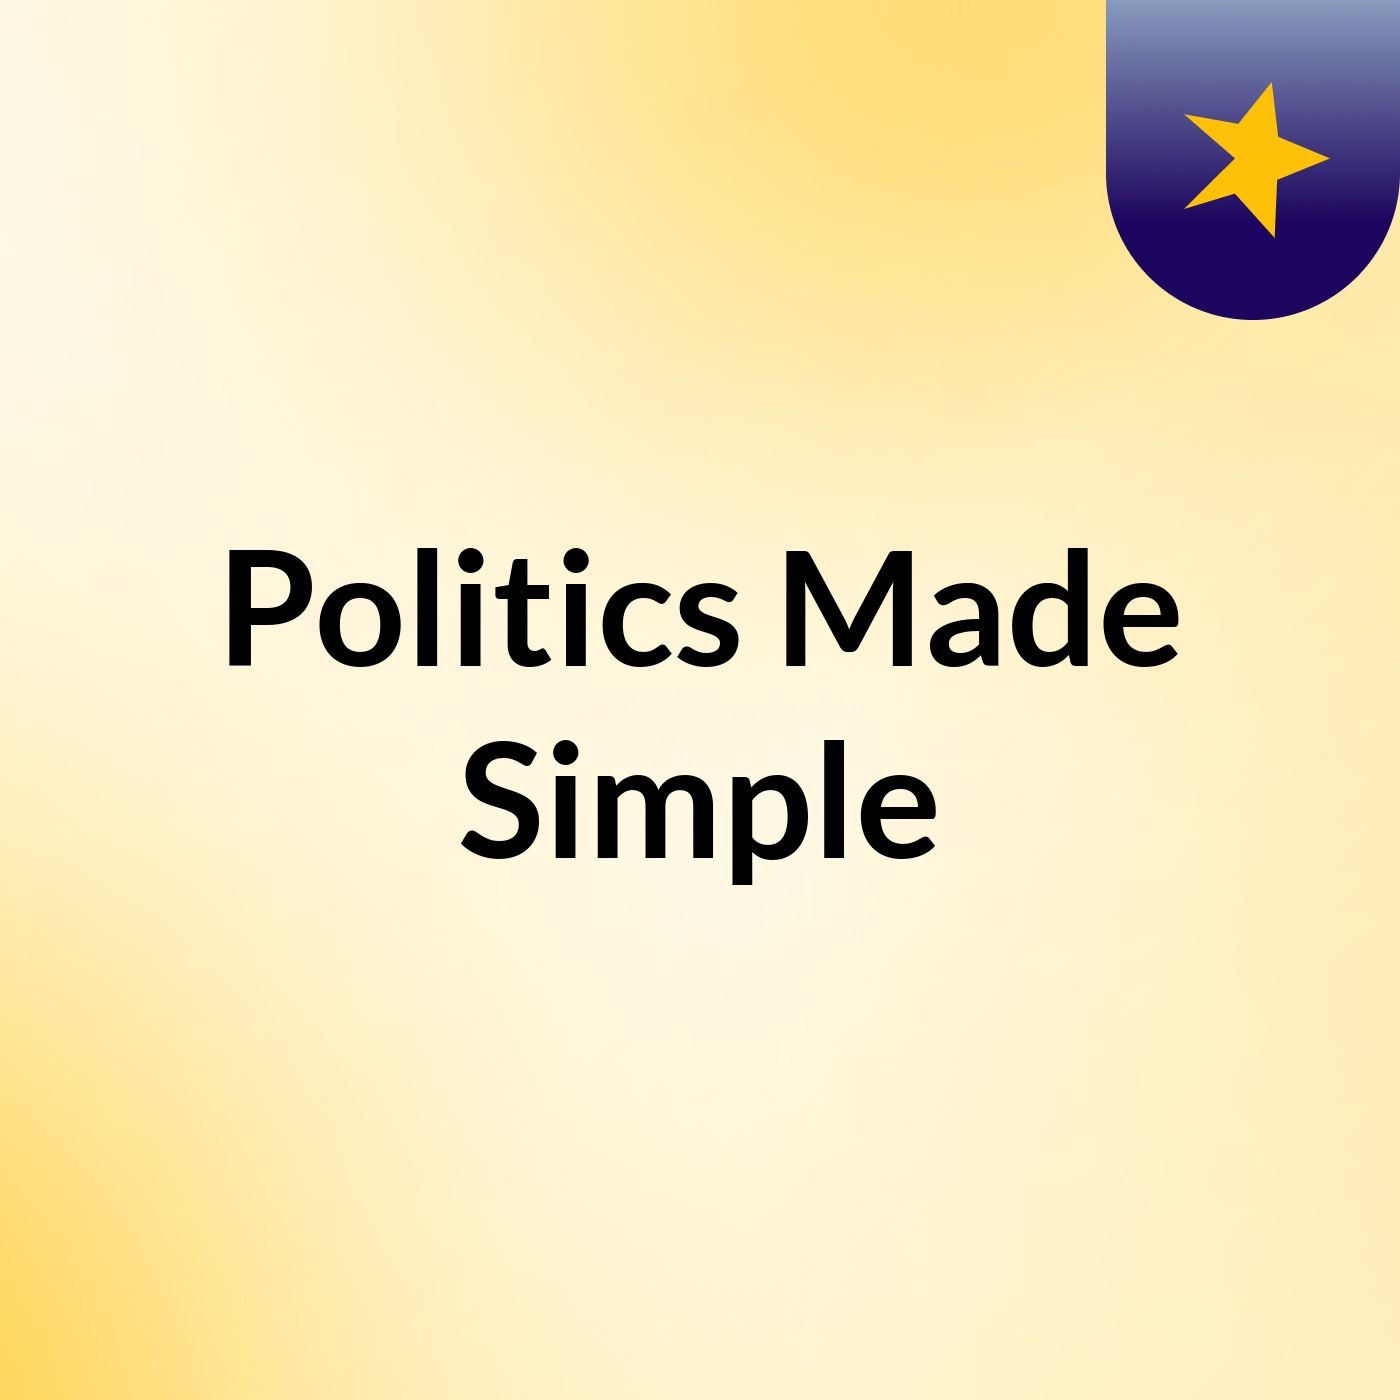 Politics Made Simple